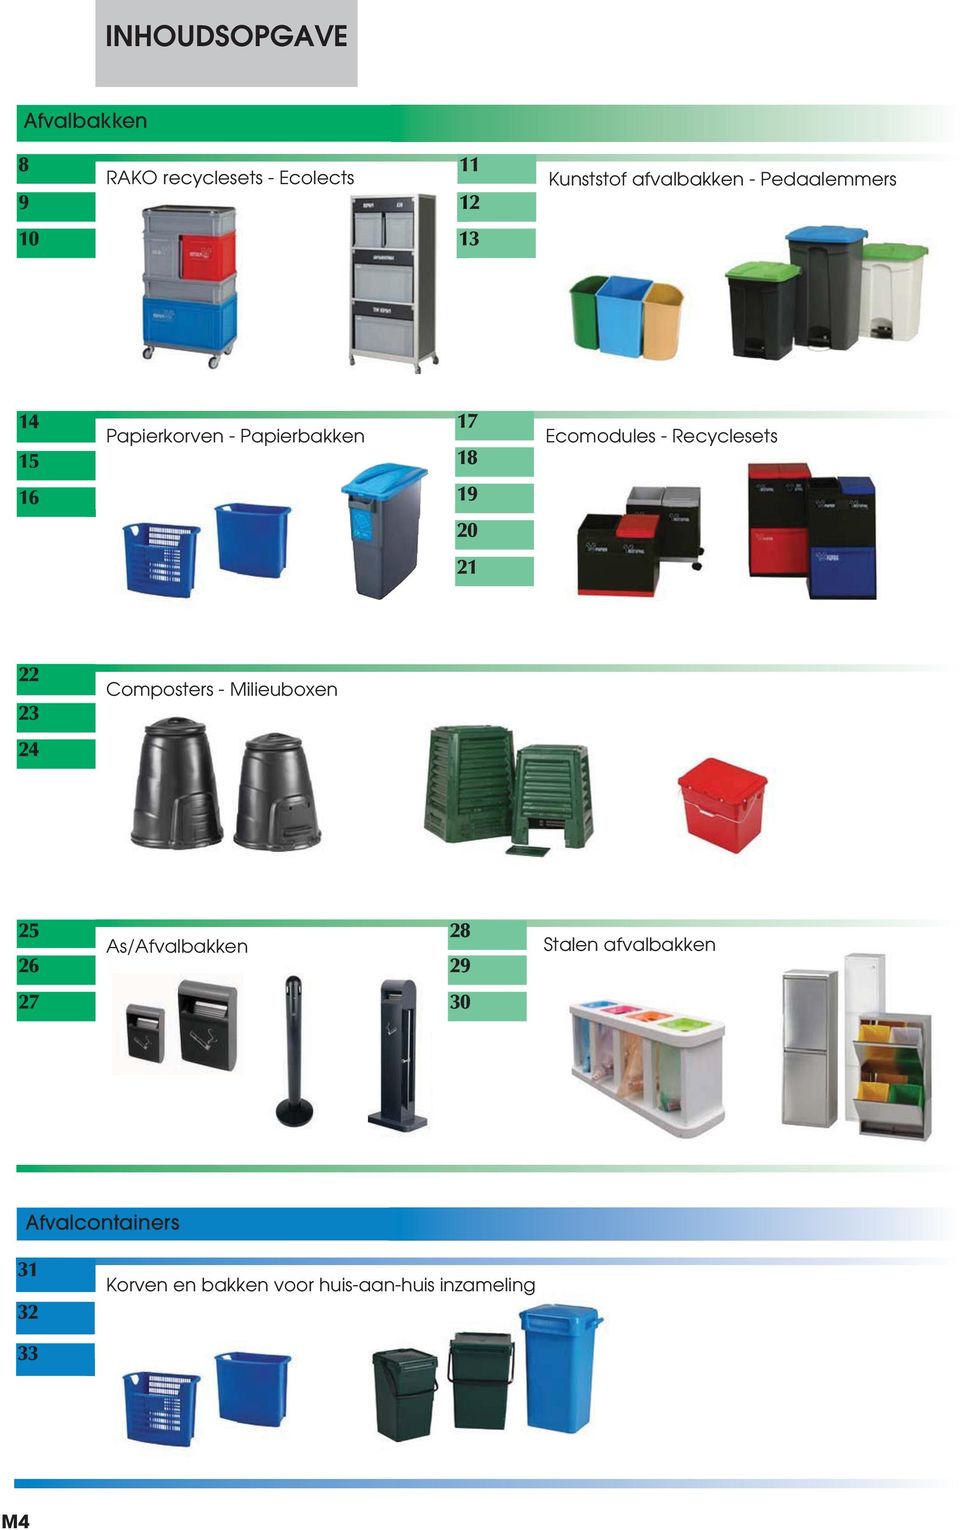 Recyclesets 16 19 20 21 22 23 Composters - Milieuboxen 24 25 26 As/Afvalbakken 28 29